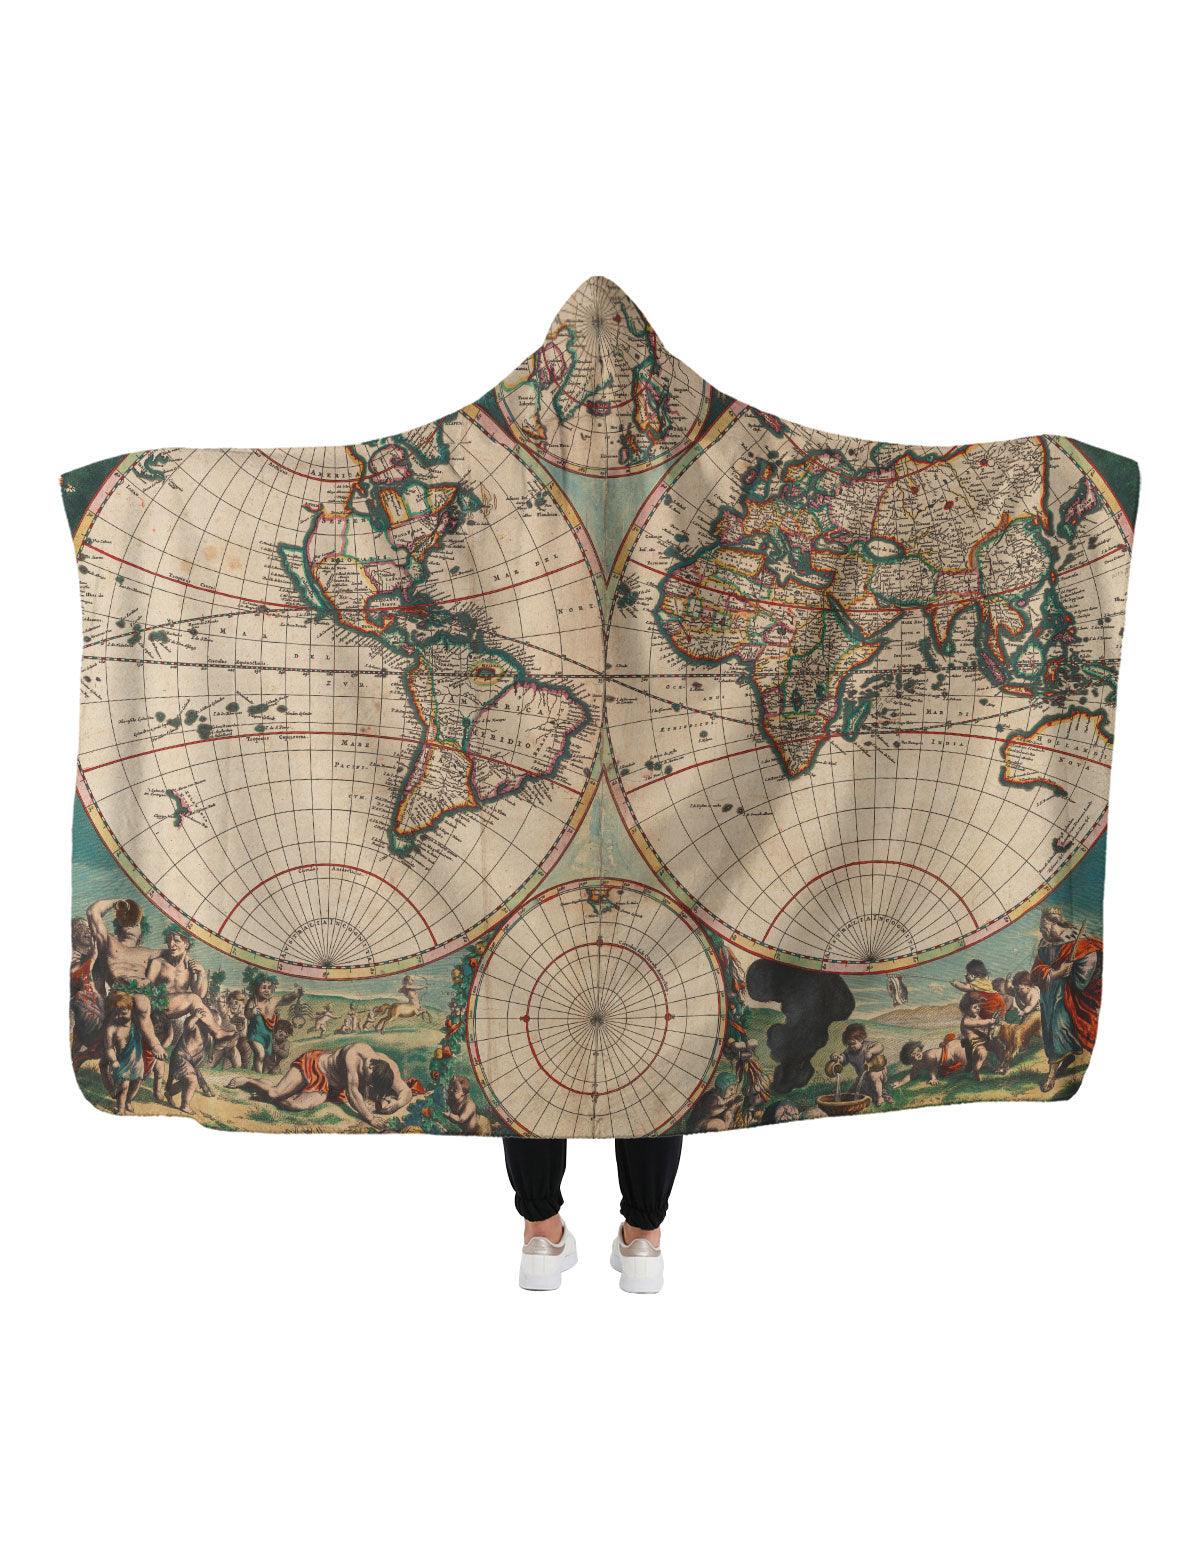 Vintage World Map Hoodie Blanket - artucky-US - battaniye, giyim, import_2022_07_19_113509, kapşonlu, kapşonlu battaniye, map, maps, van gogh, vintage, world map